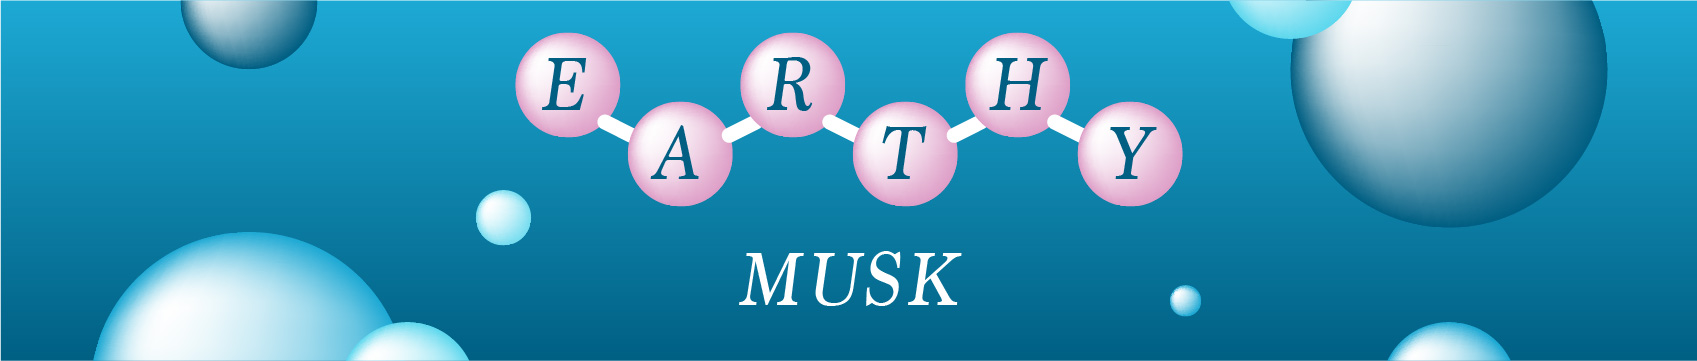 illustration of molecules earthy musk